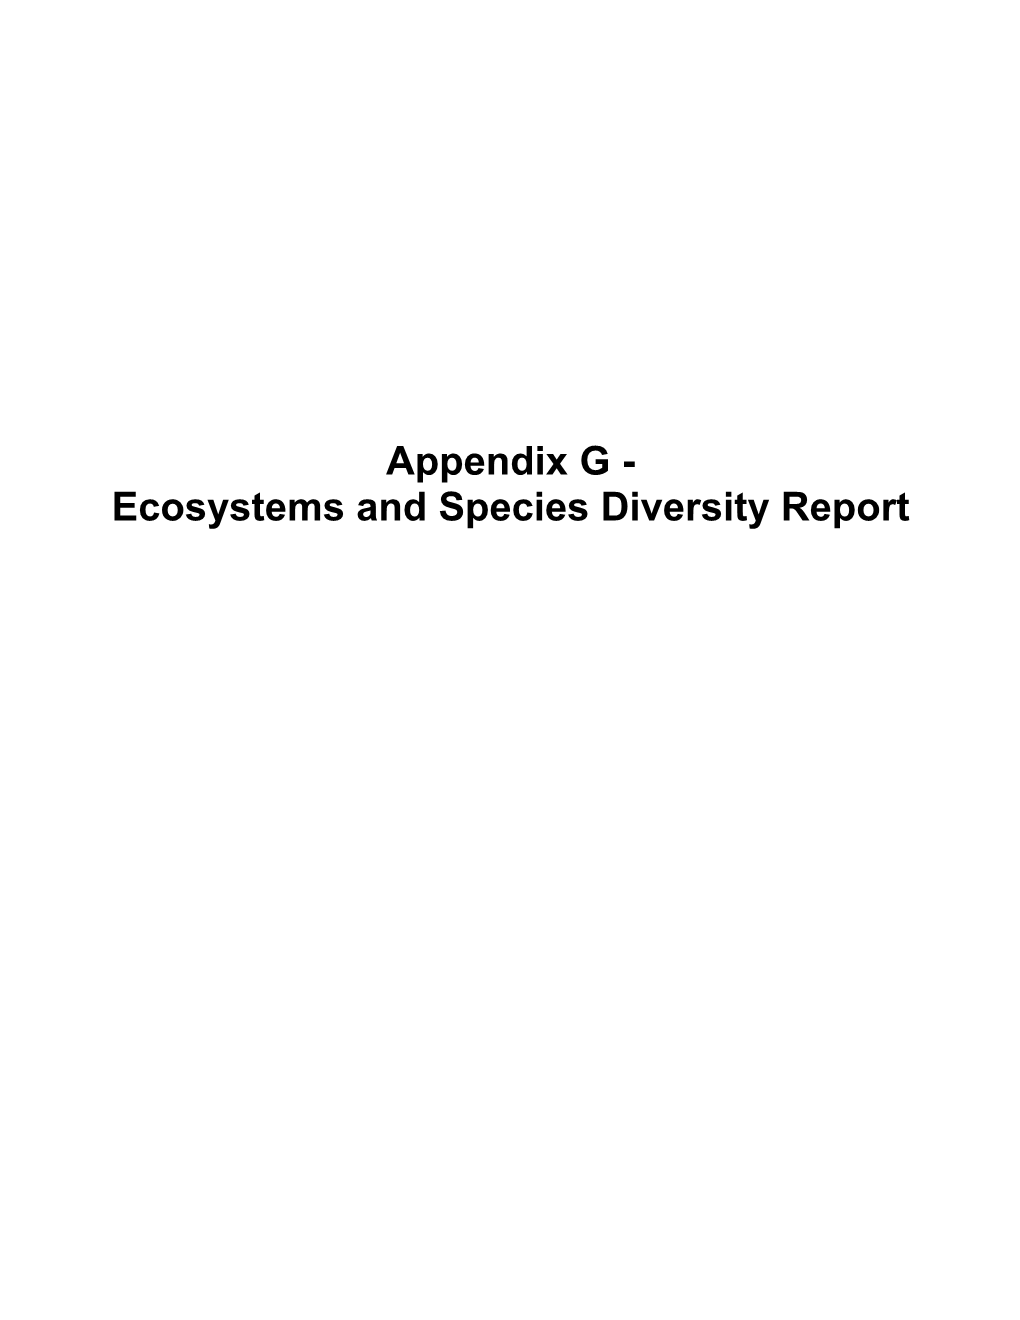 Appendix G - Ecosystems and Species Diversity Report